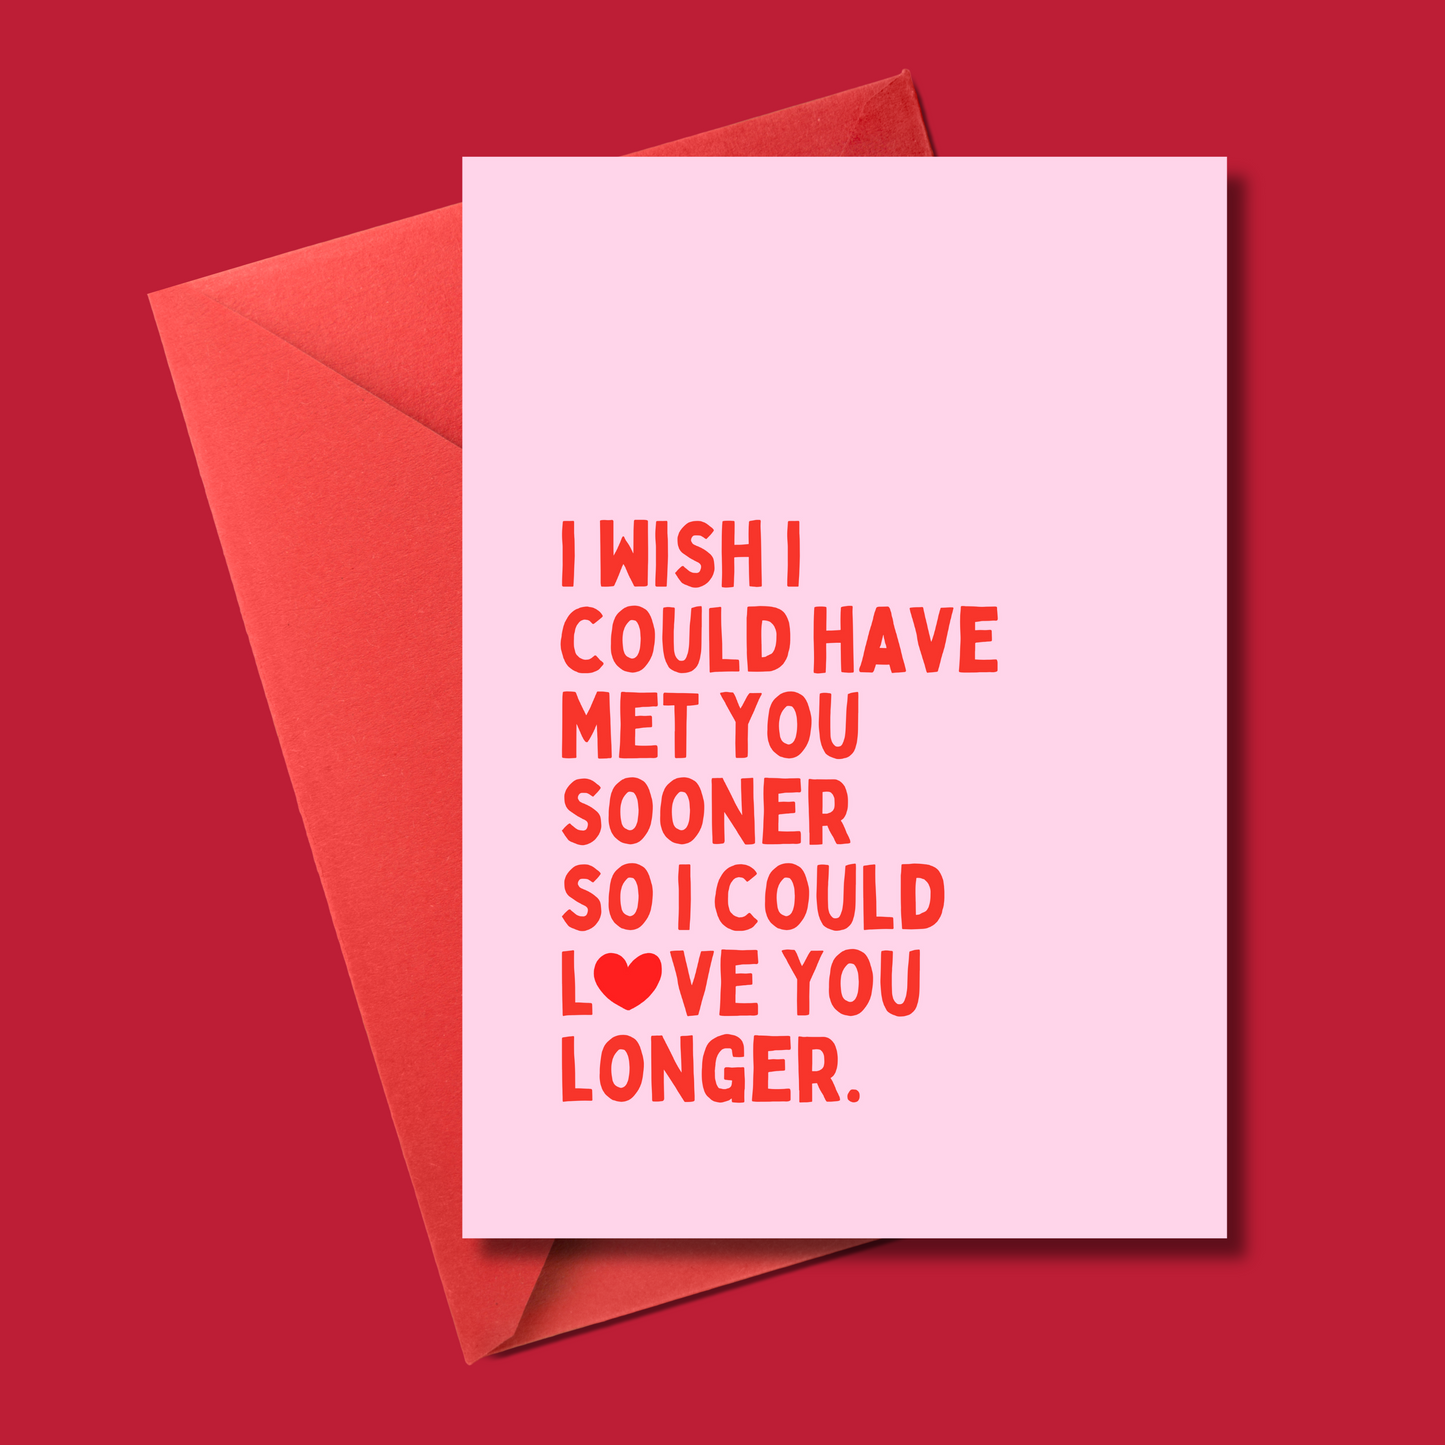 Love you longer (5x7” print/card)